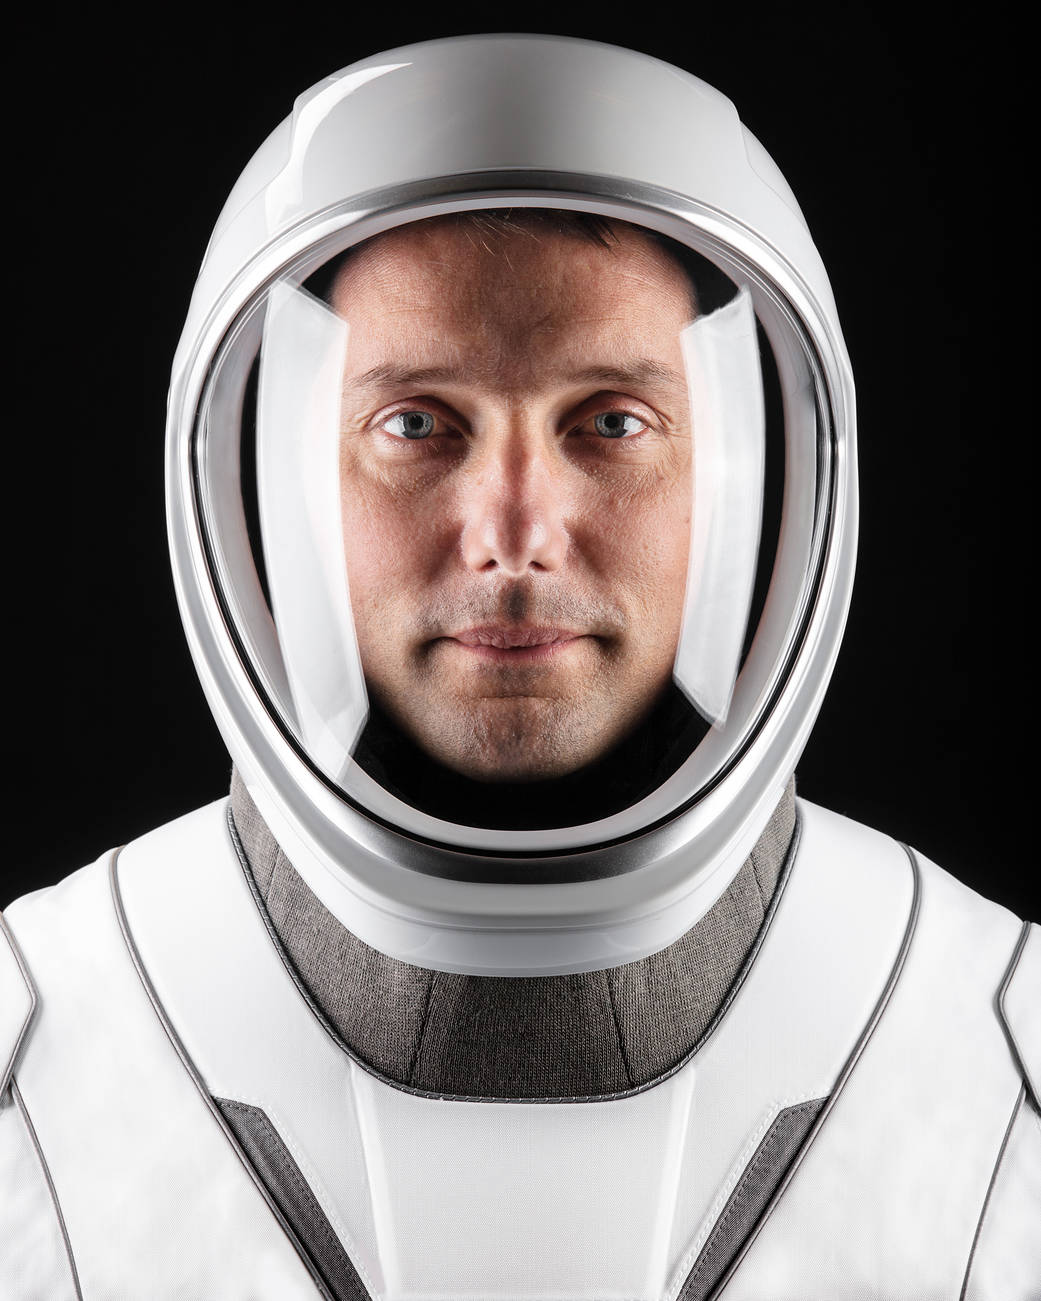 SpaceX Crew-2 Mission Specialist Thomas Pesquet of ESA